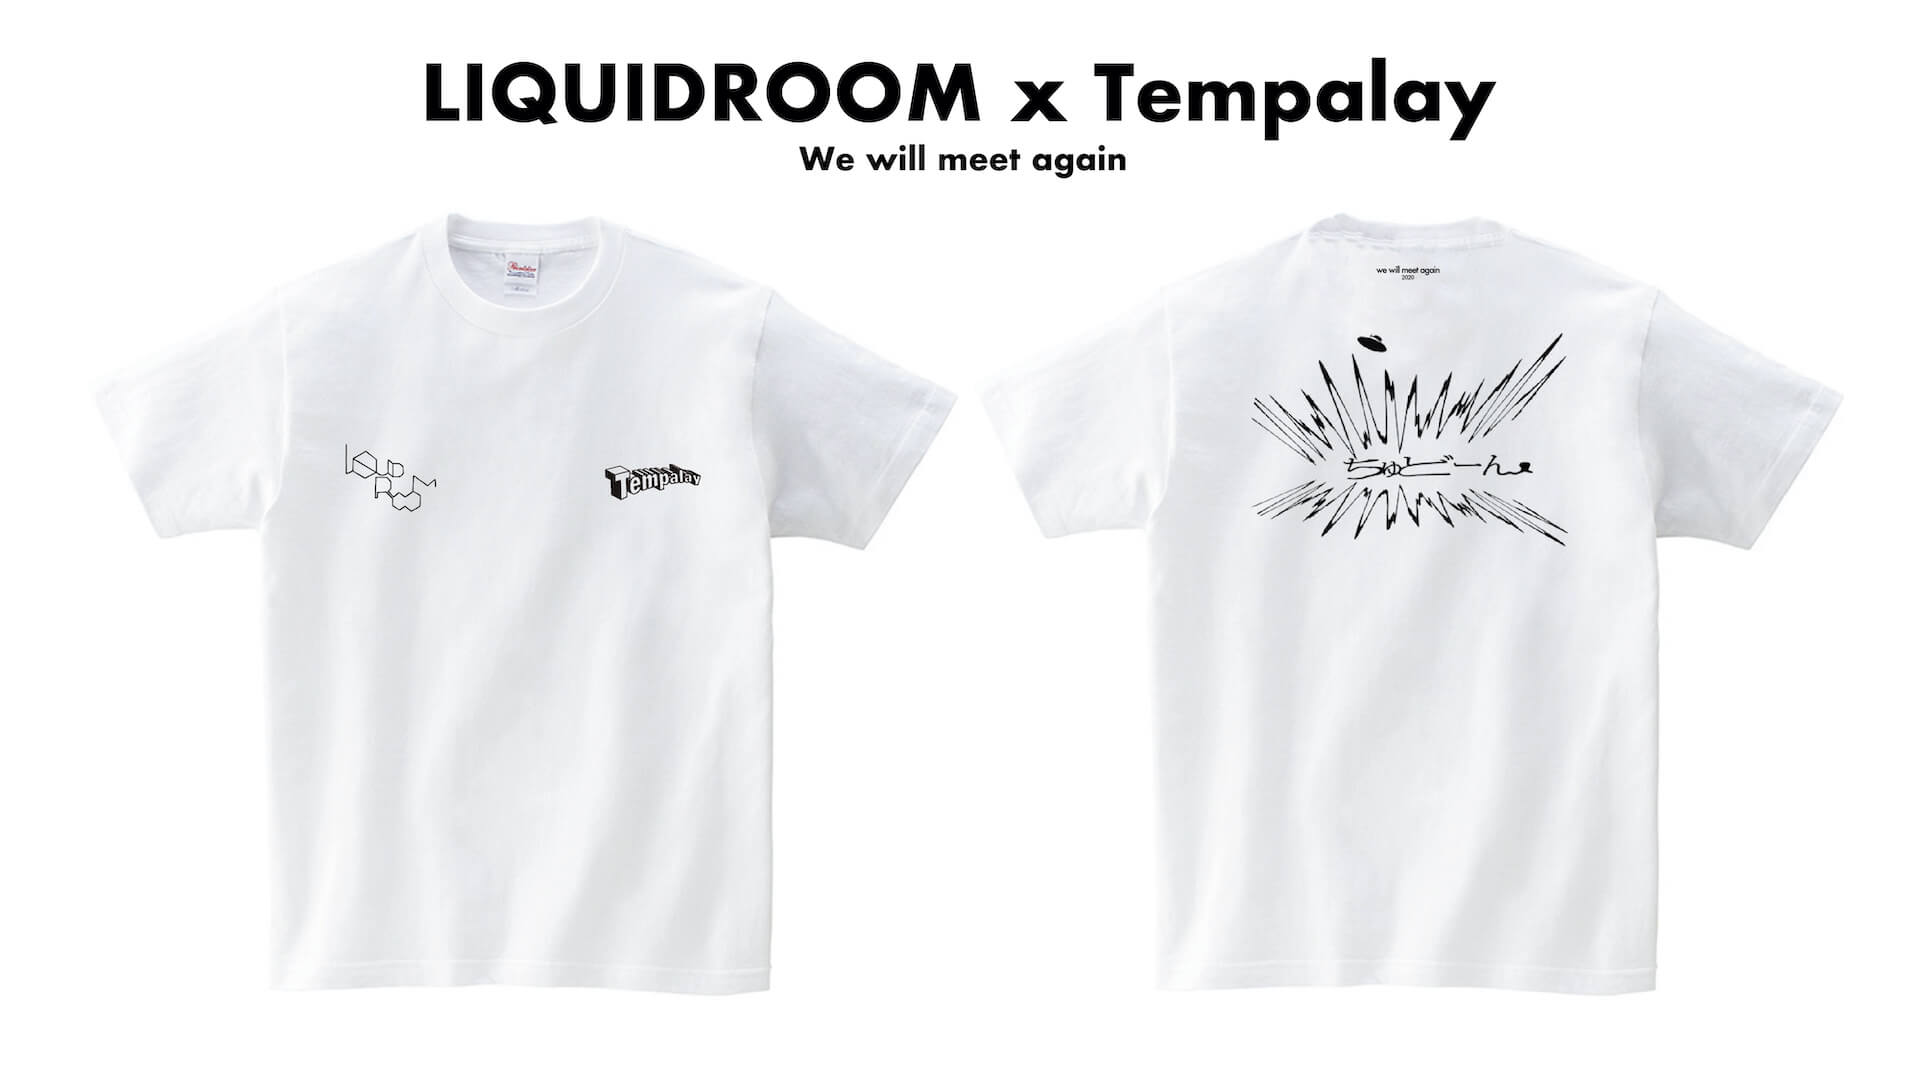 Tempalay「ちゅどーん」──LIQUIDROOMのコラボTプロジェクト〈We will meet again〉より新作登場 music201106-liquidroom-tempalay-1